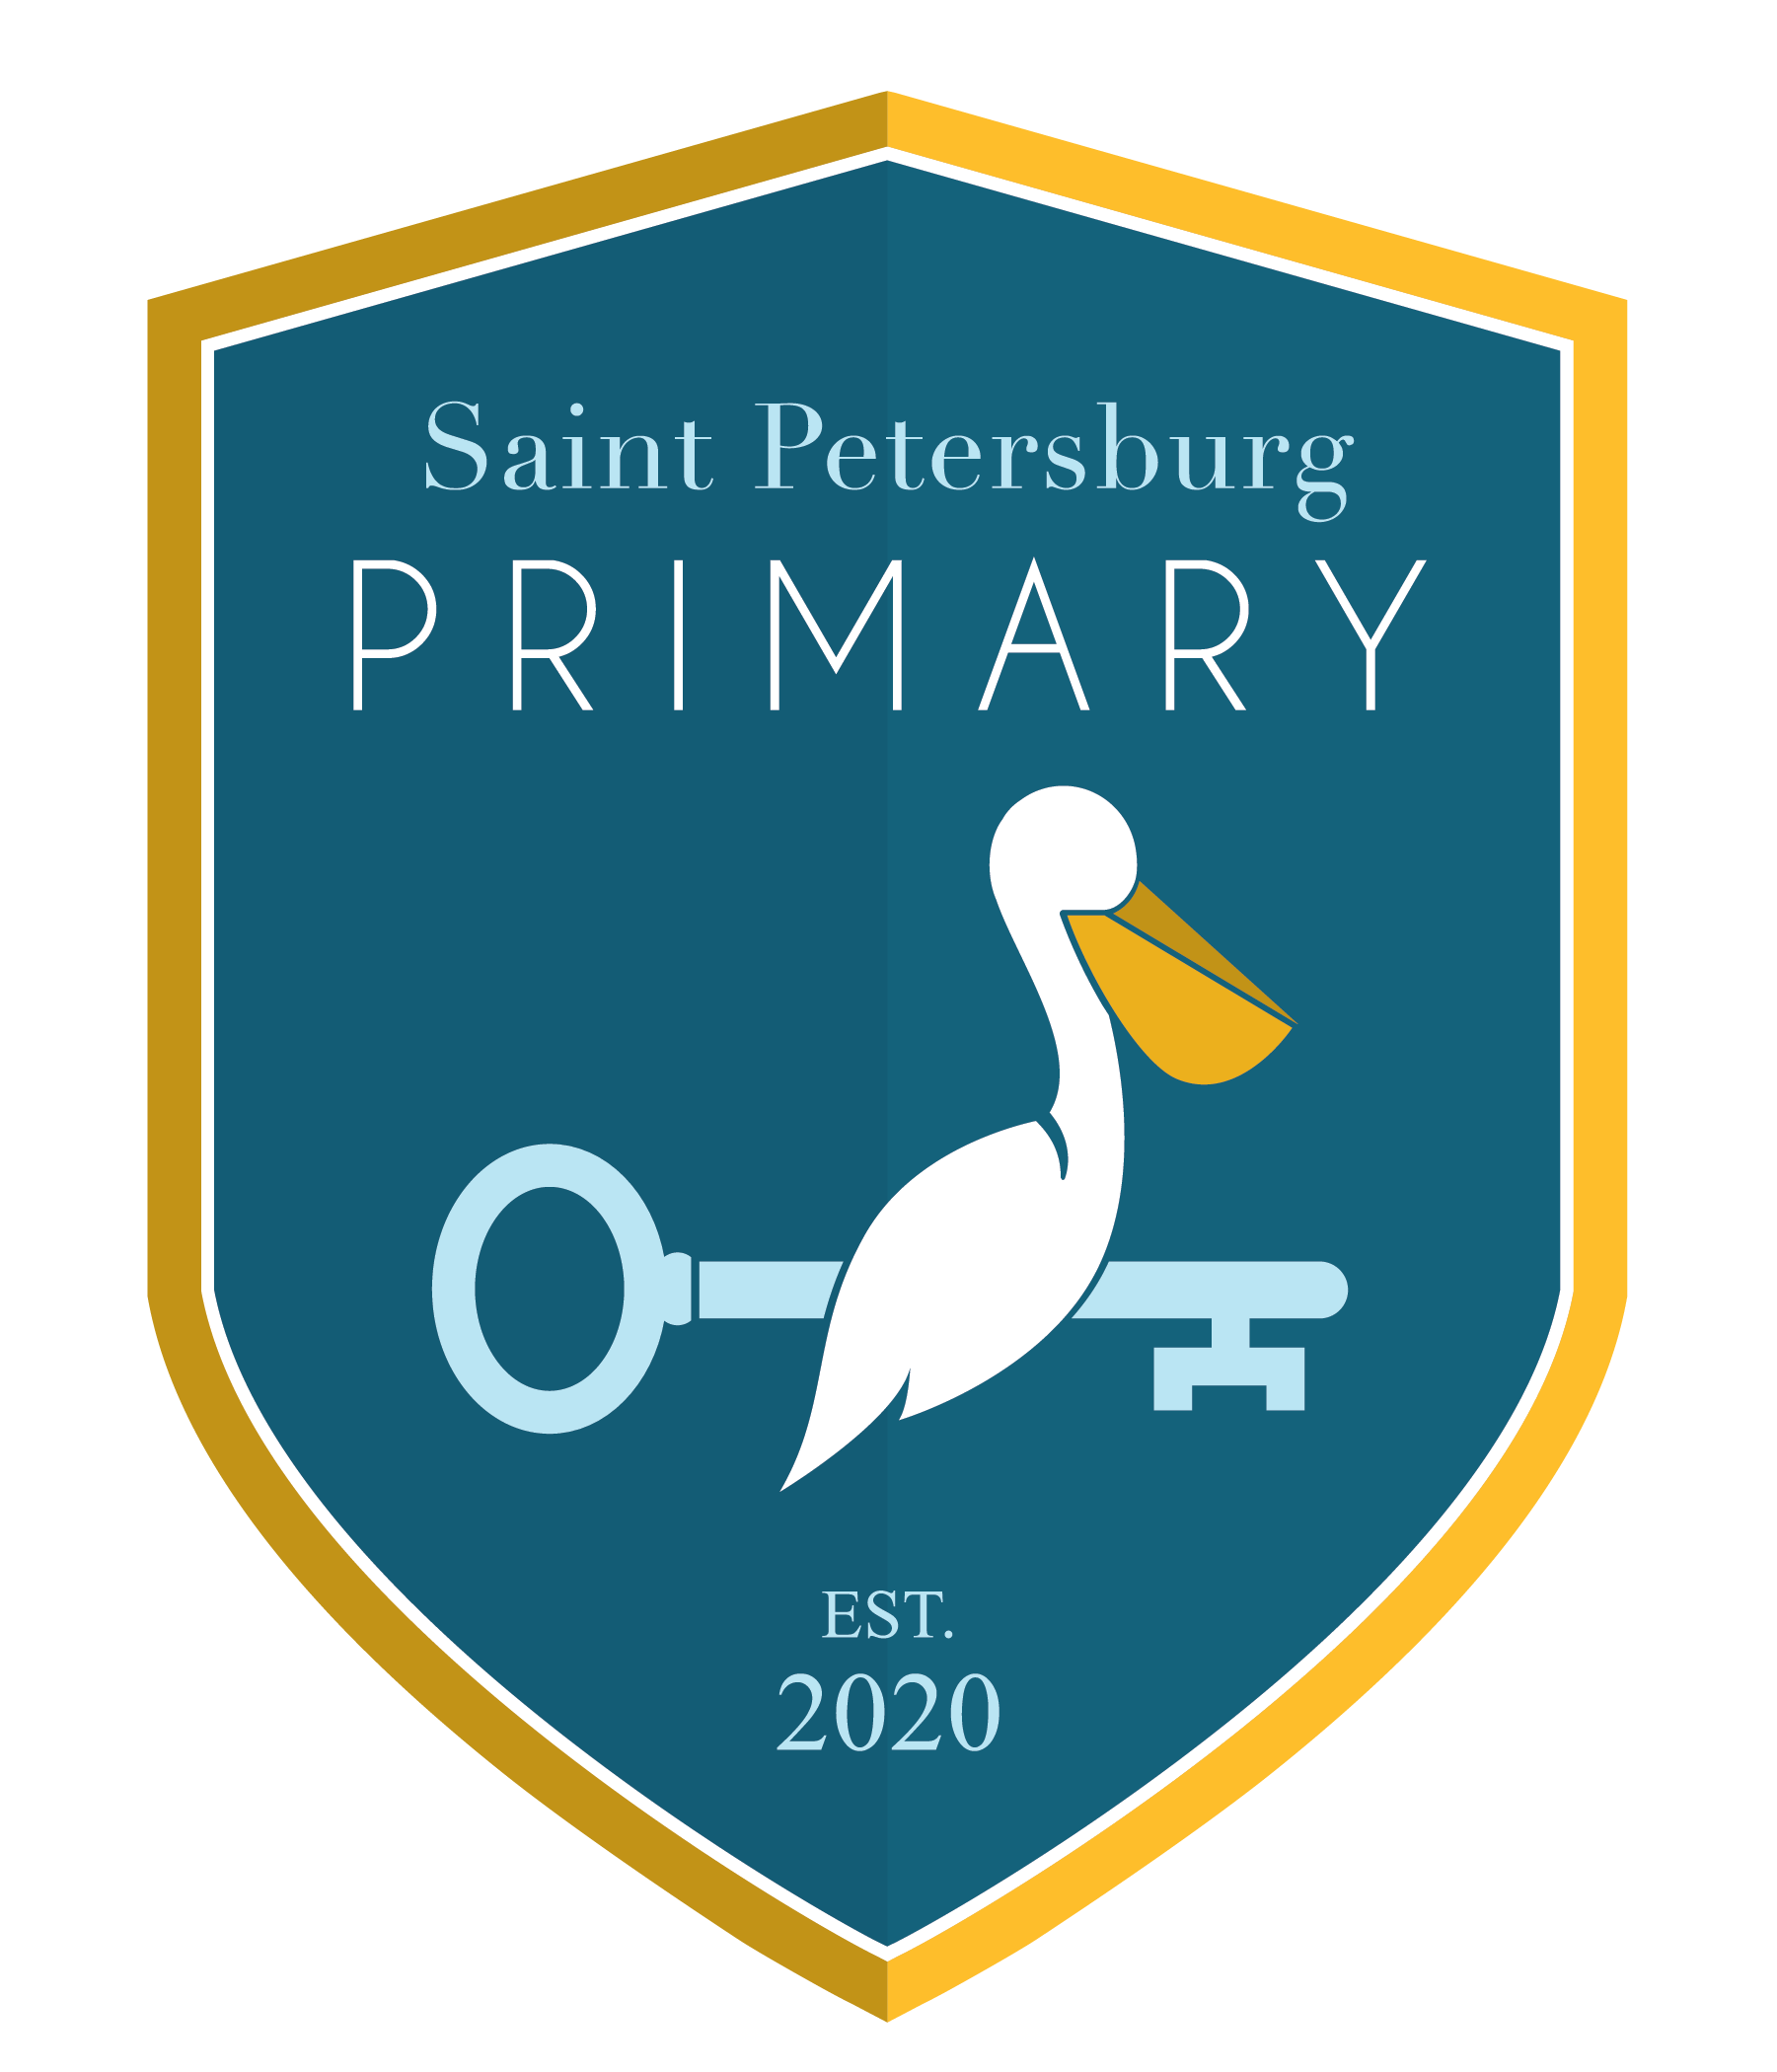 St. Petersburg Primary School logo